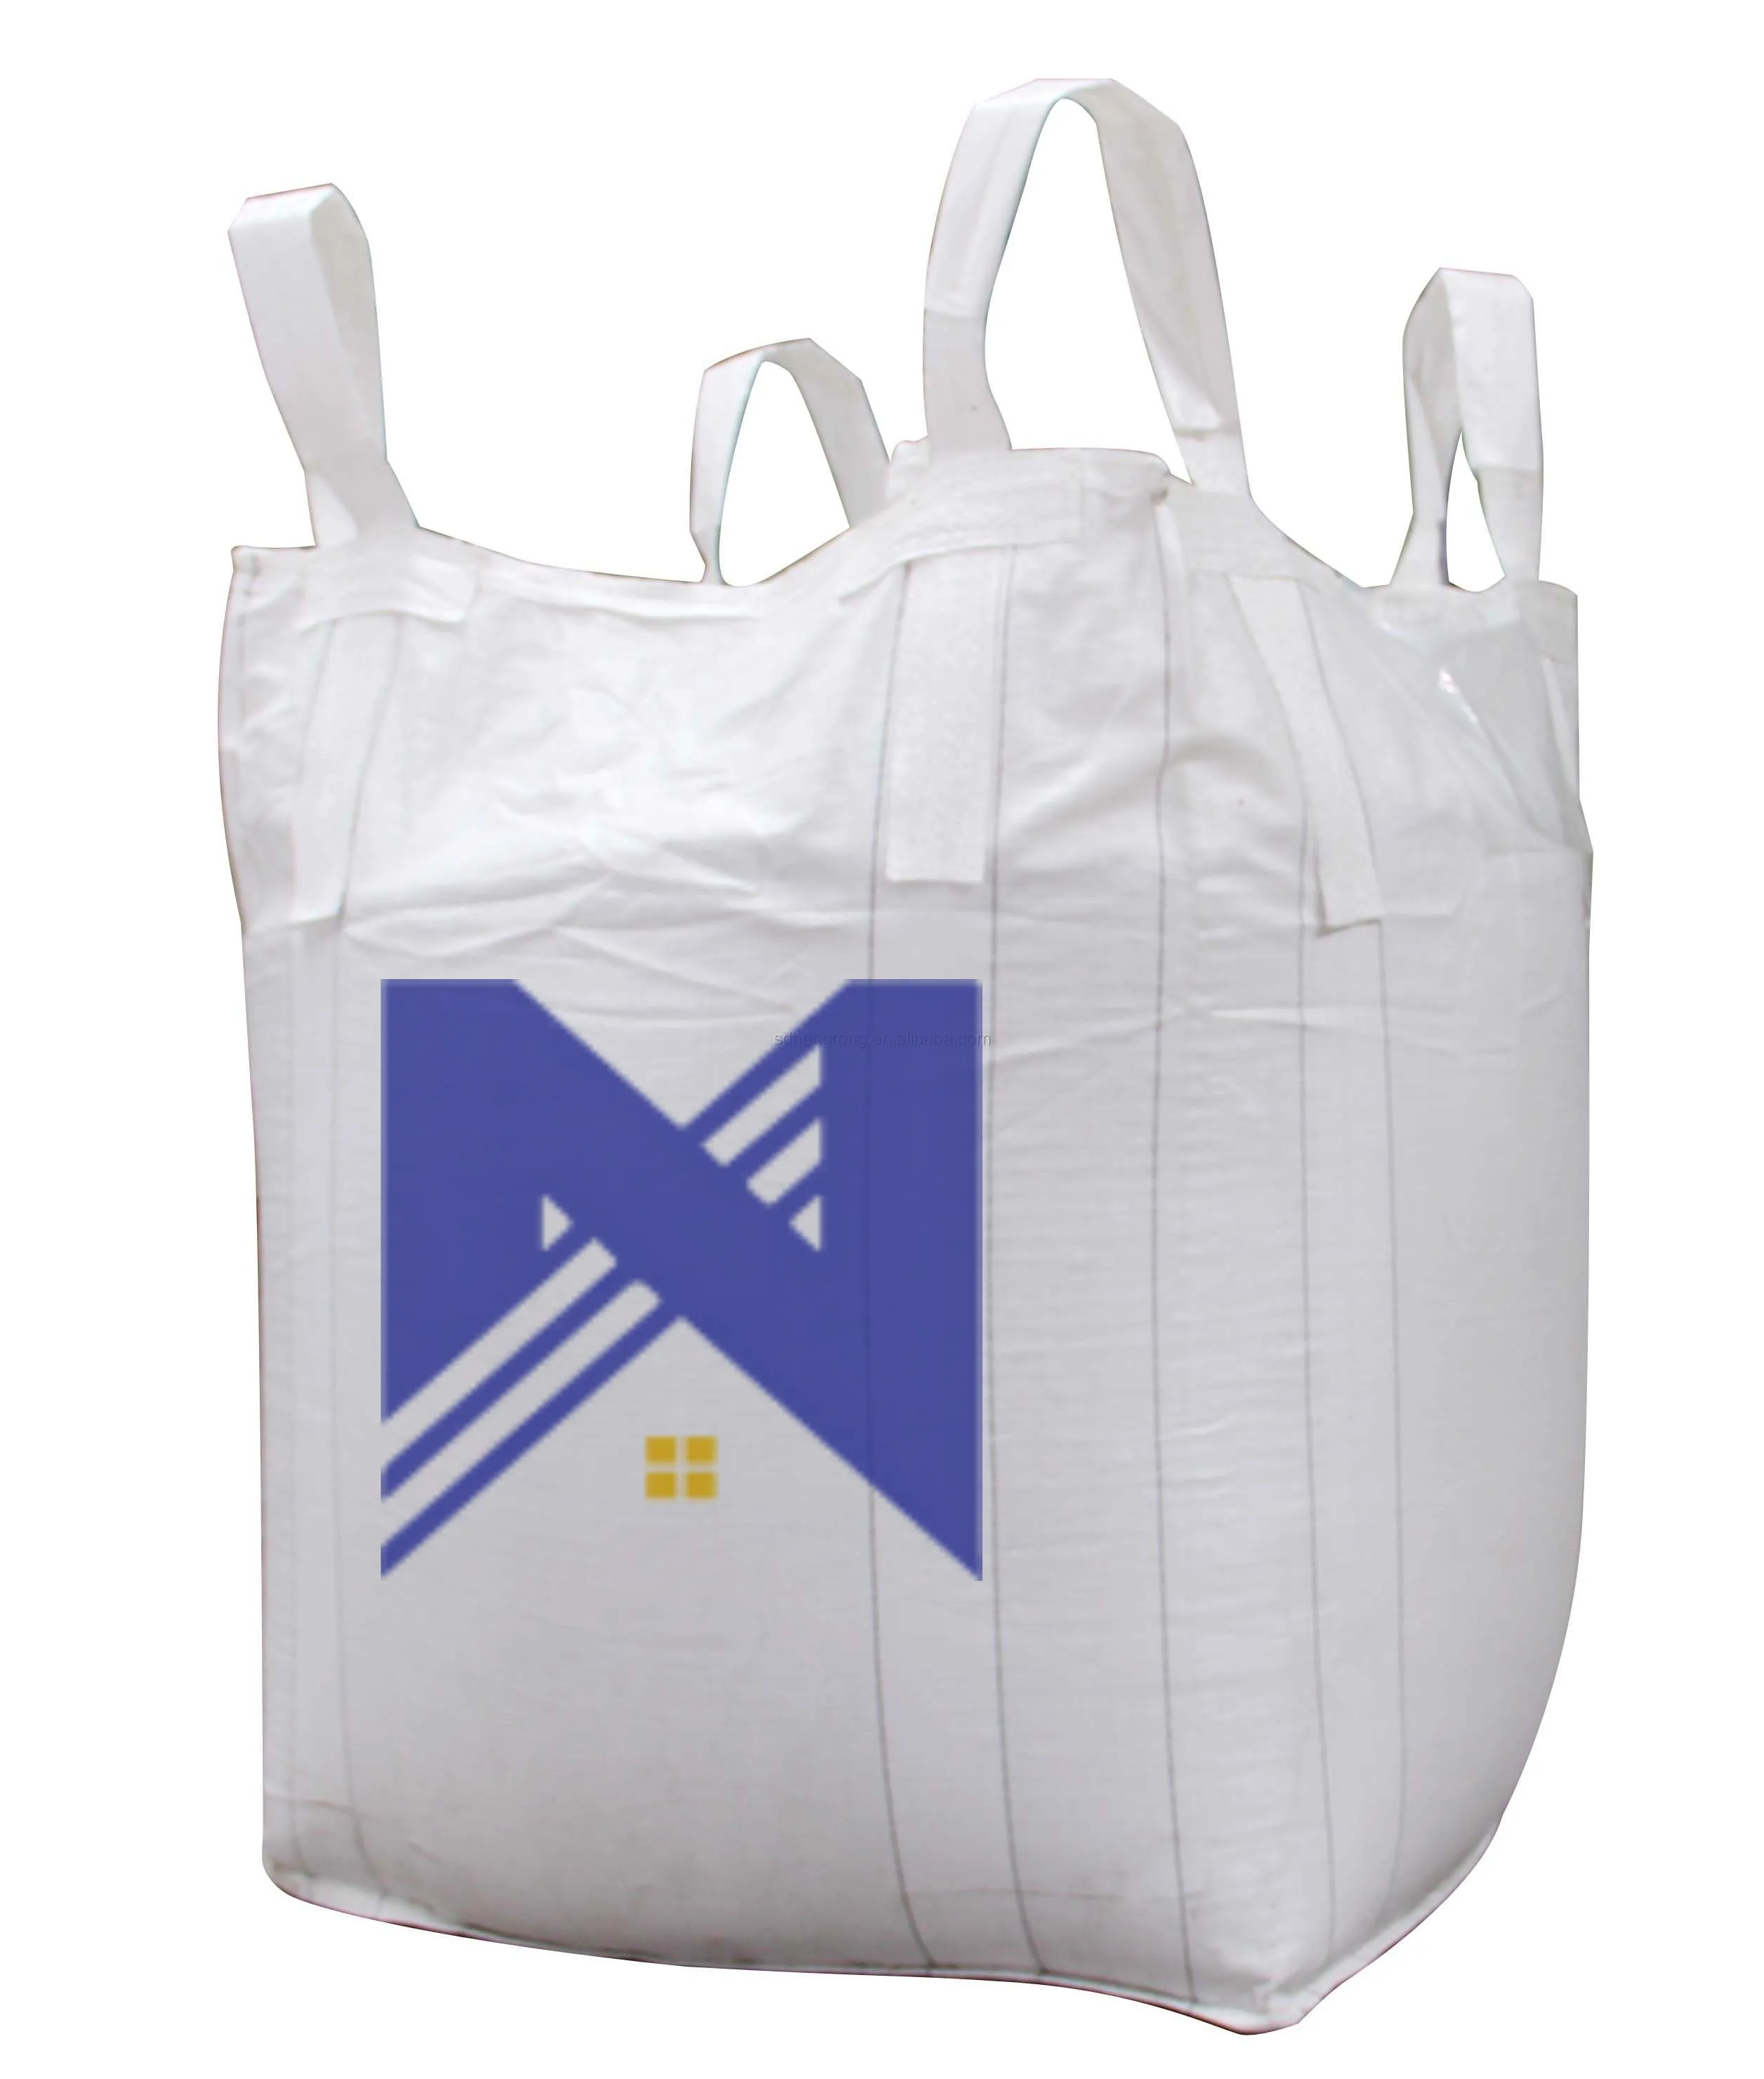 Container bag sewing jumbo pakistan storage bags with zips scrap fibc bag